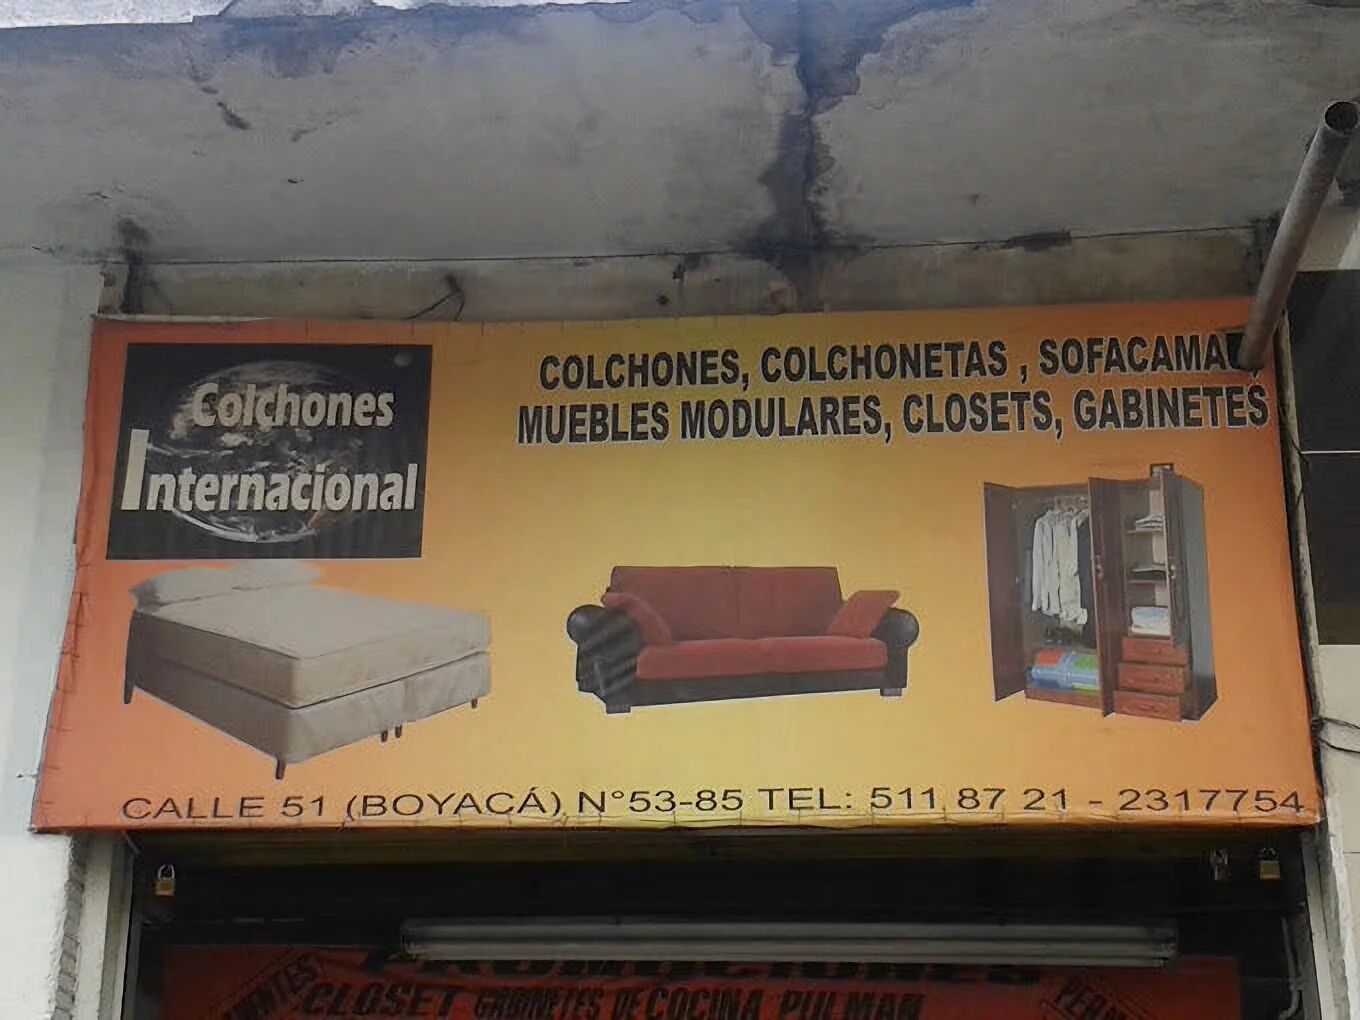 Colchones-colchones-internacional-16759